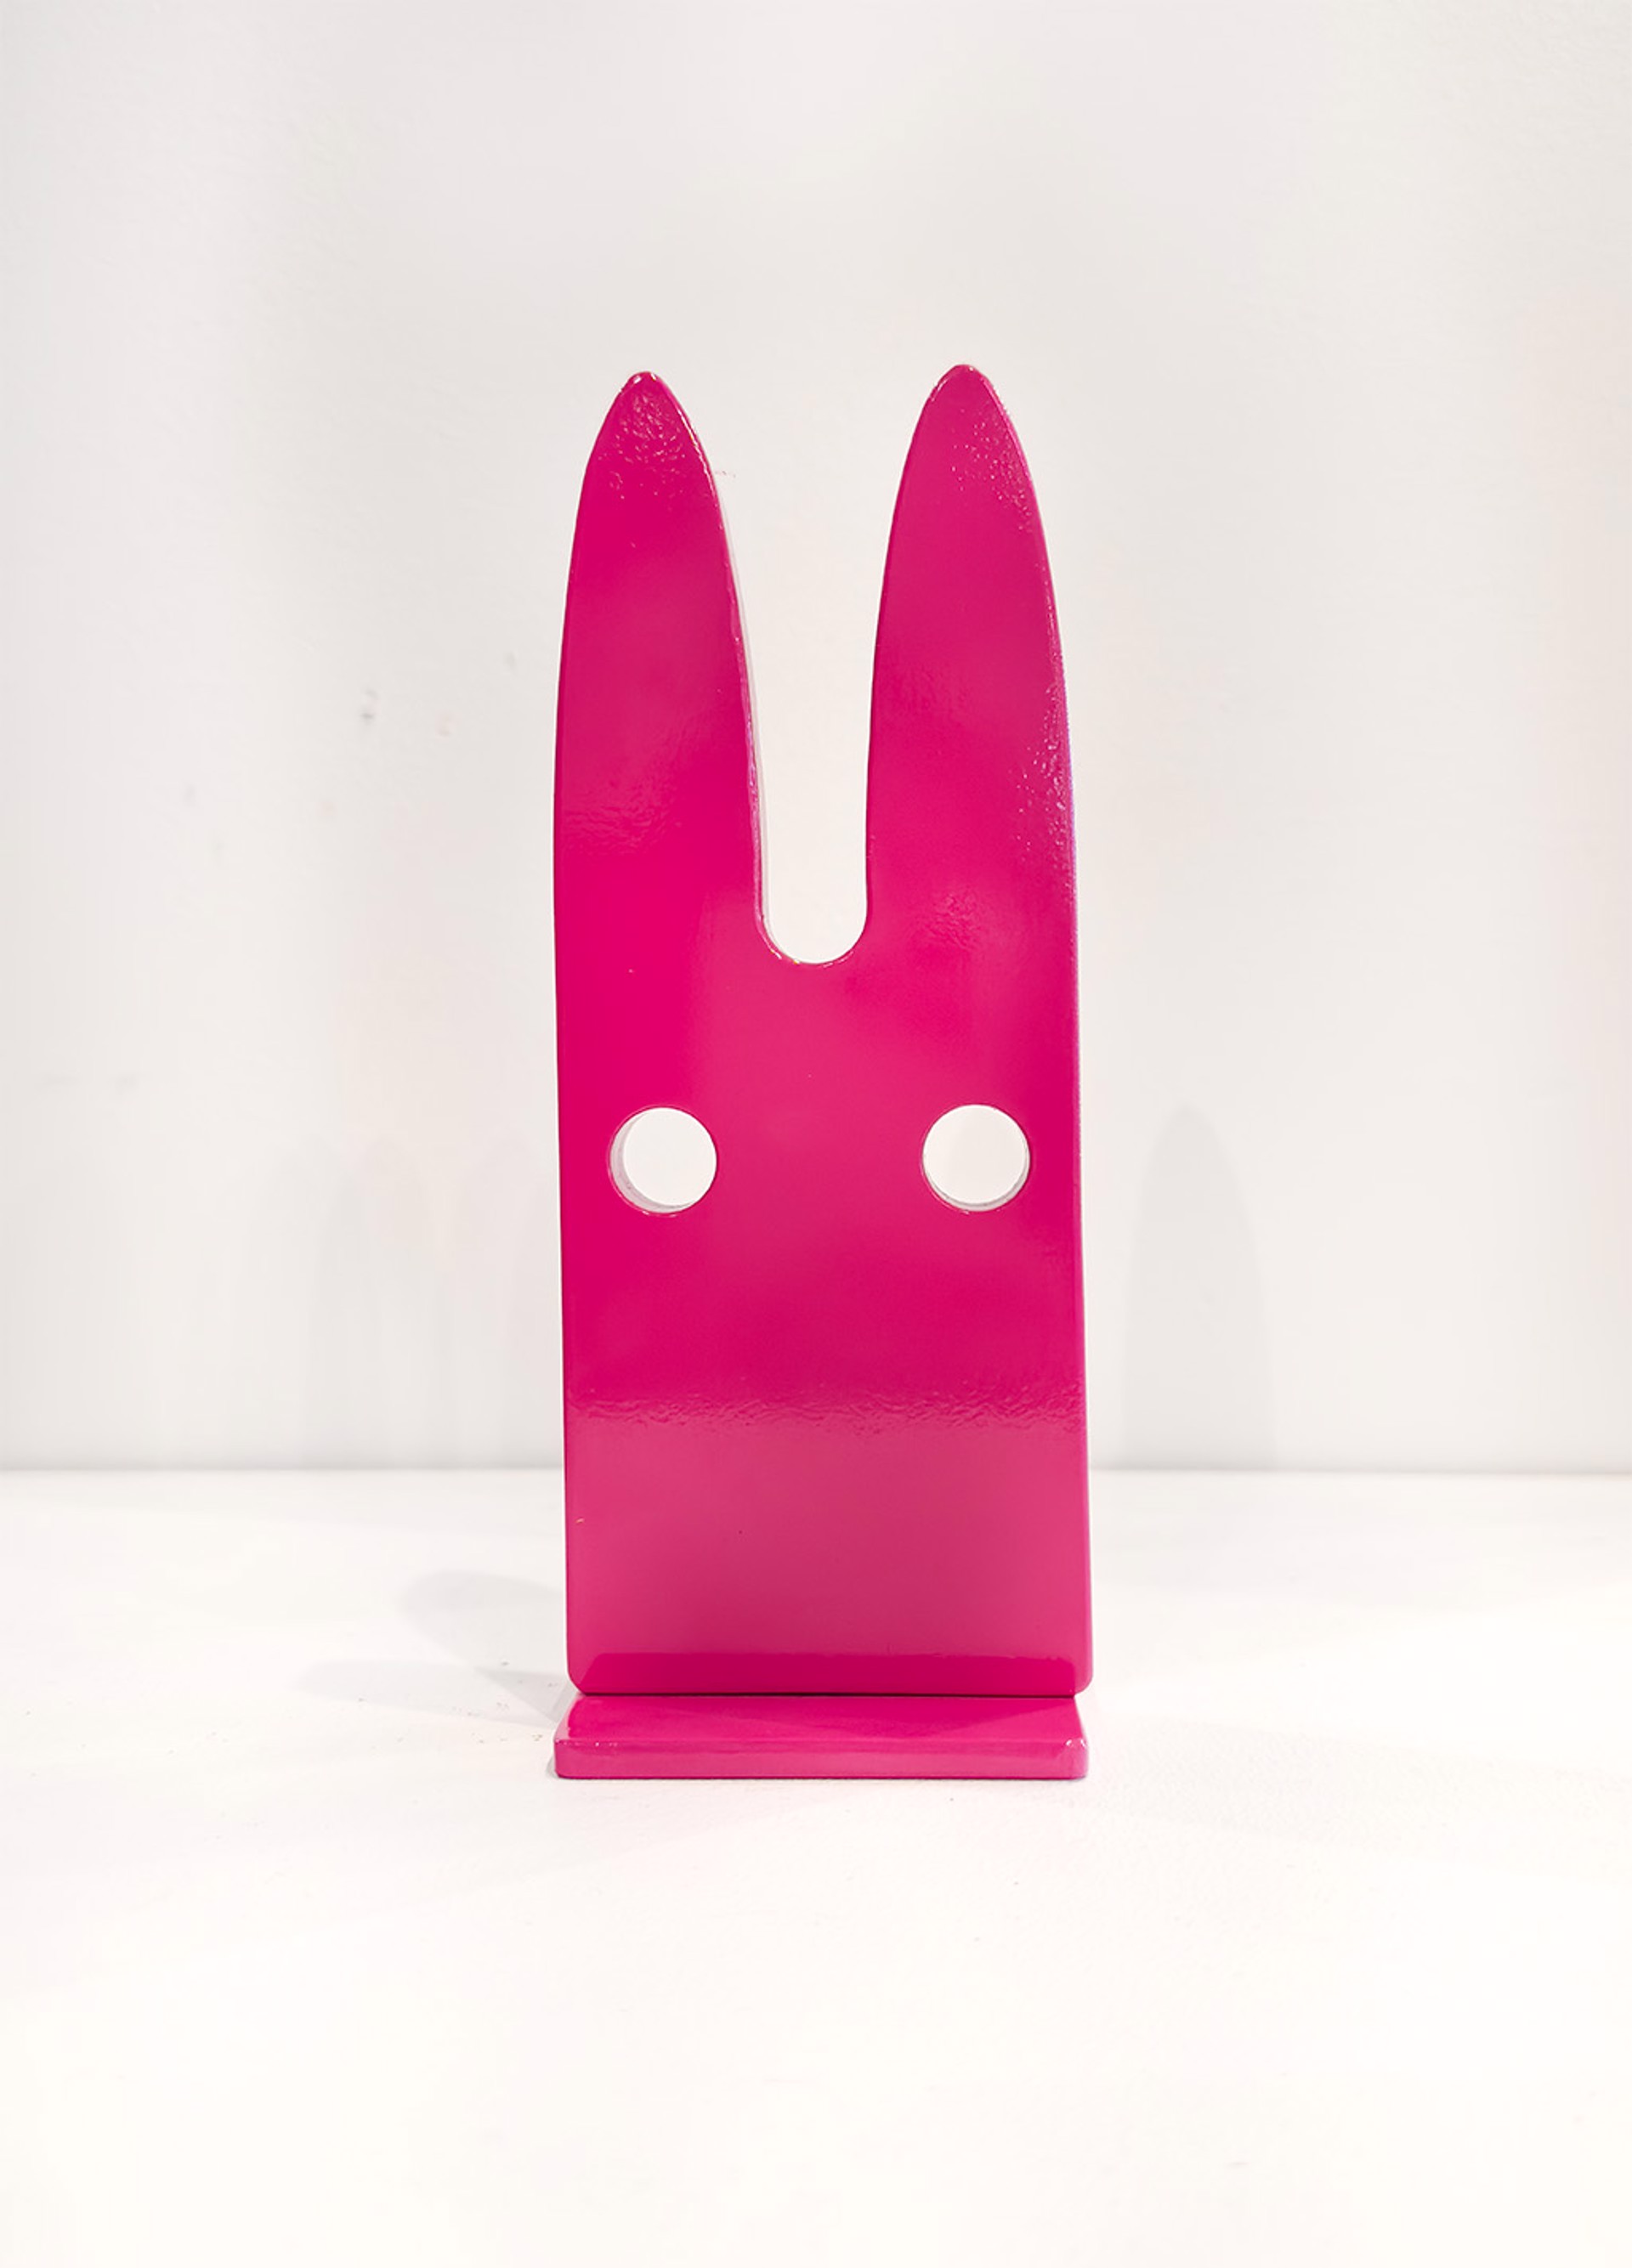 Miniature Aluminium Sculpture By Jeffie Brewer Featuring A Simplified Pink Bunny